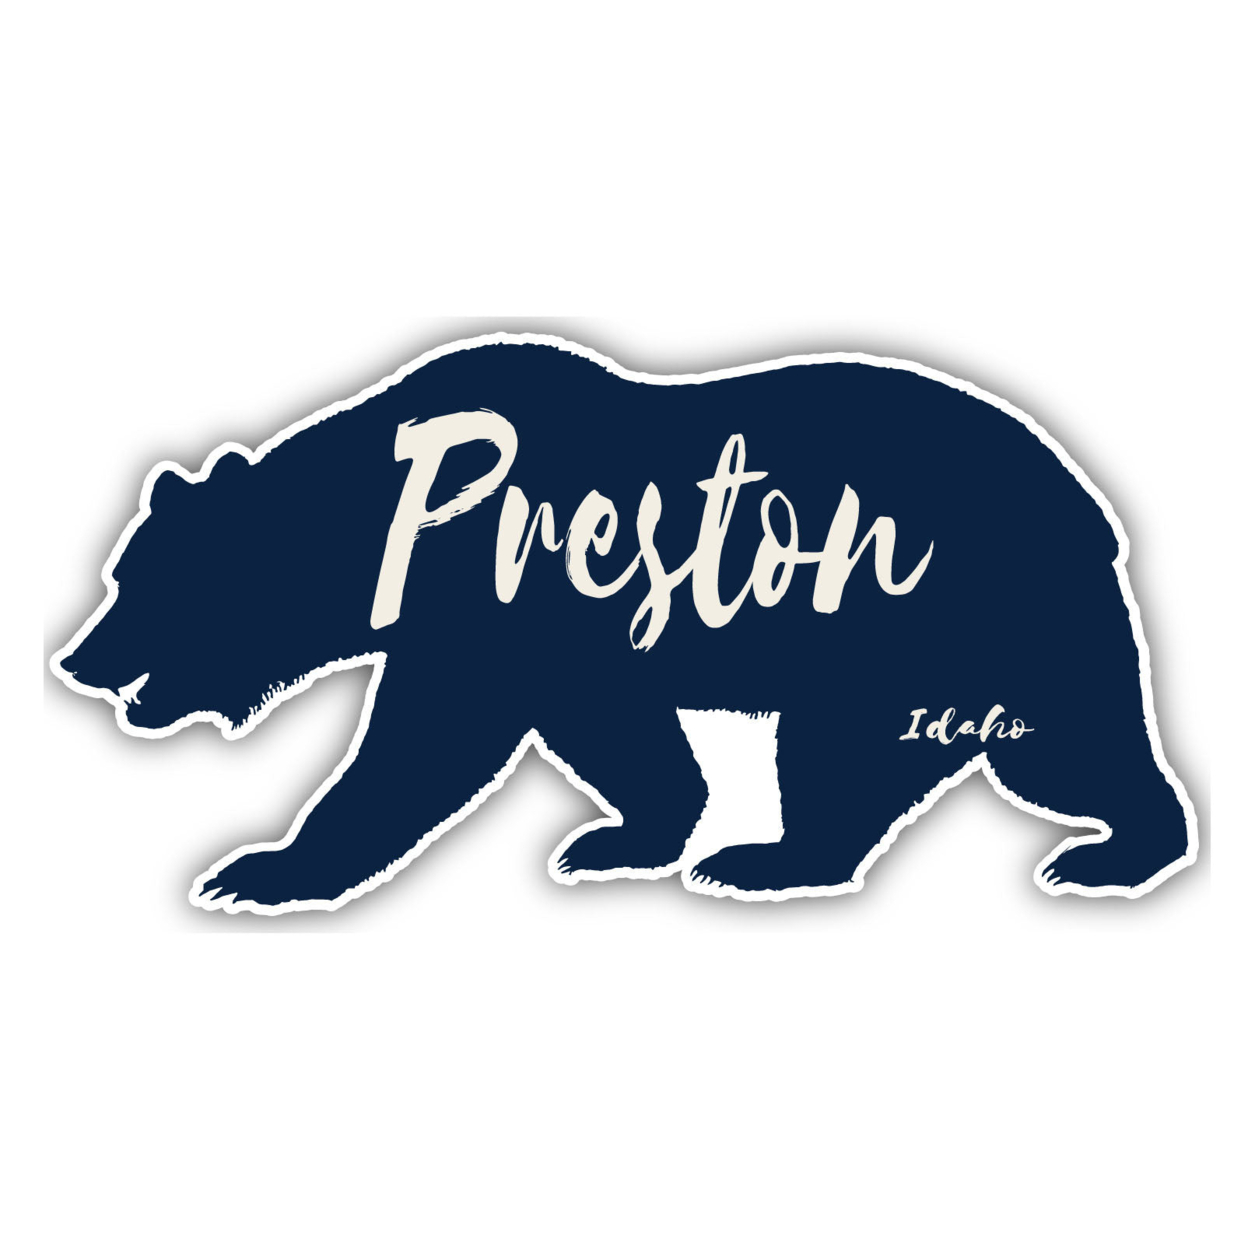 Preston Idaho Souvenir Decorative Stickers (Choose Theme And Size) - Single Unit, 4-Inch, Bear